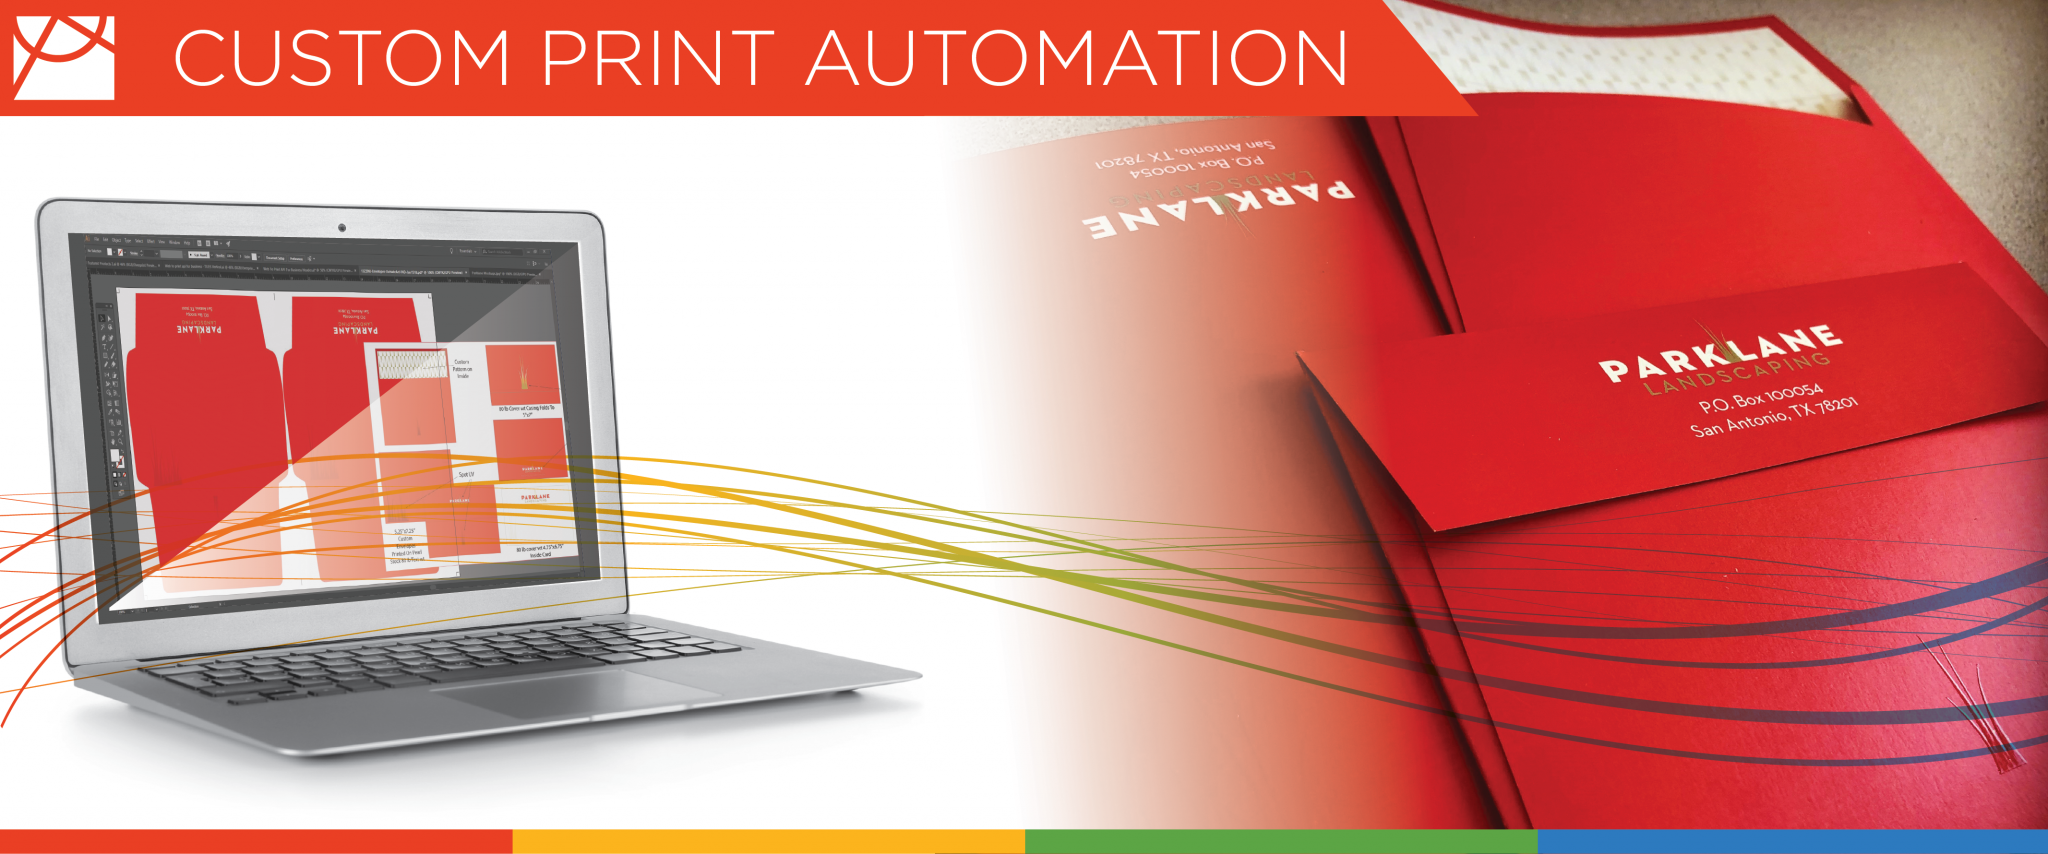 Custom Print Automation